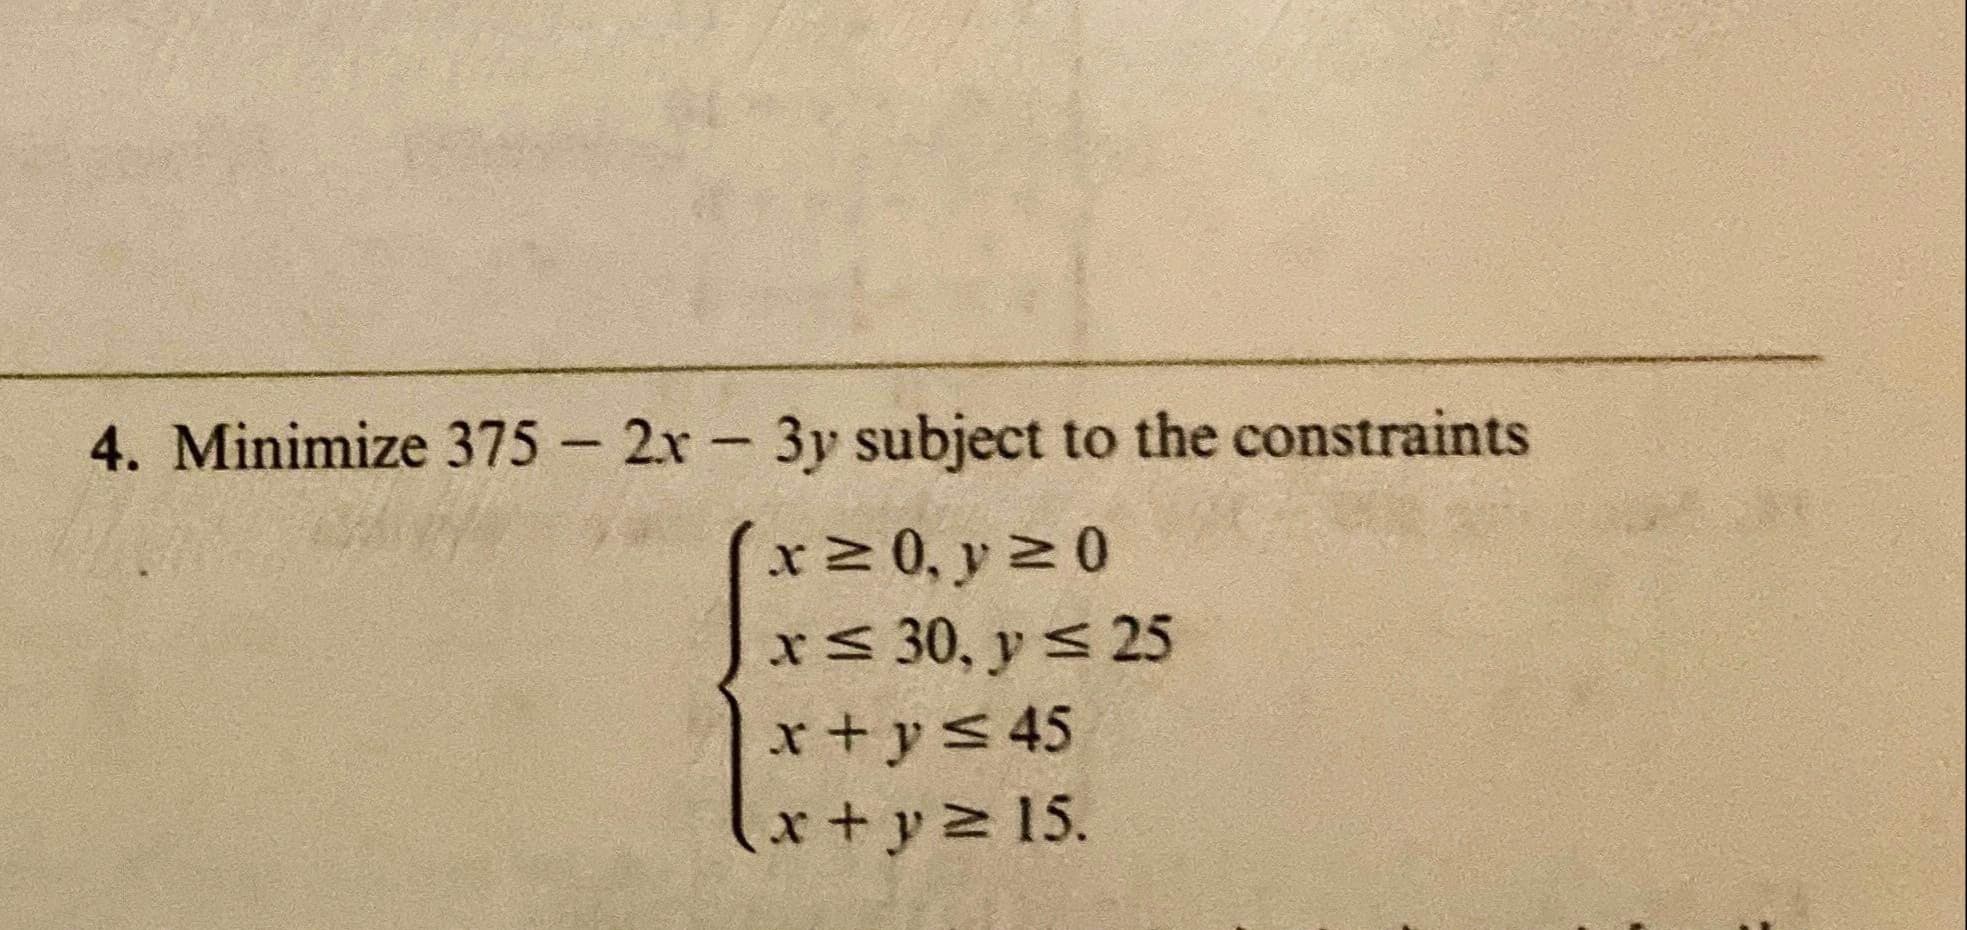 4. Minimize 375 2x 3y subject to the constraints
x2 0, y 2 0
x< 30, y < 25
x+y< 45
(x+y%15.
